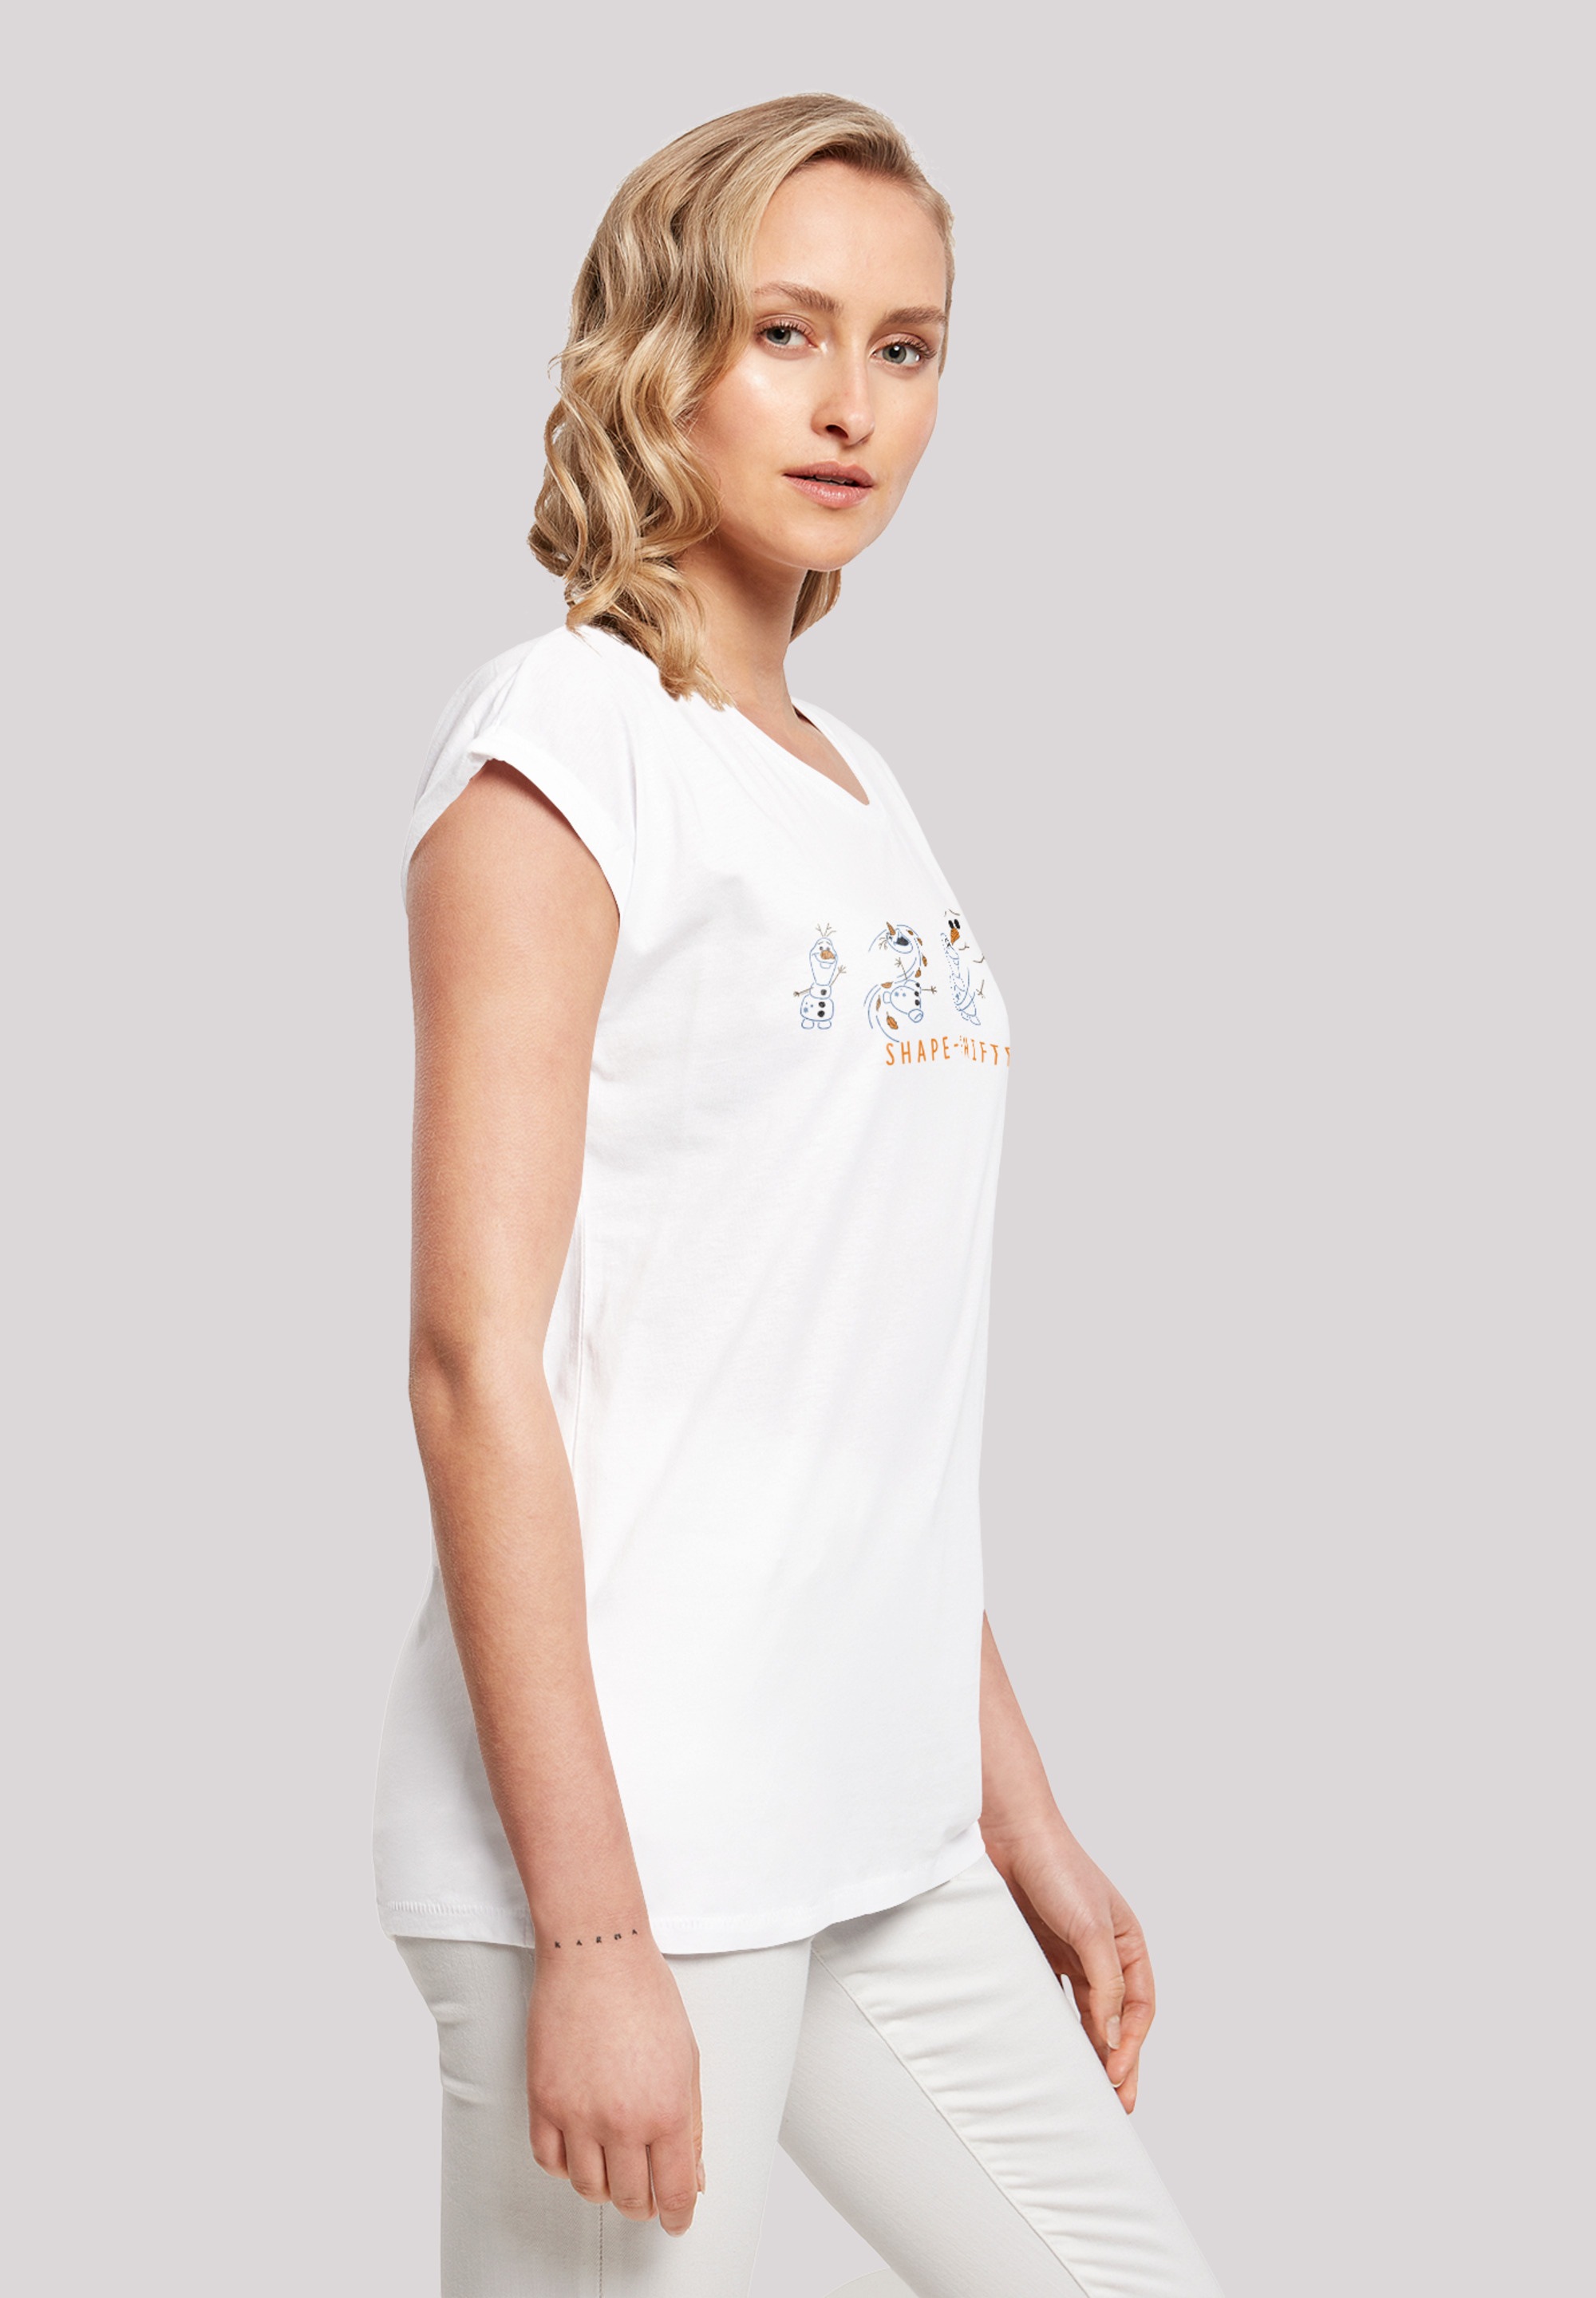 Olaf | Frozen 2 »Disney F4NT4STIC T-Shirt Shape-Shifter«, für BAUR Print bestellen